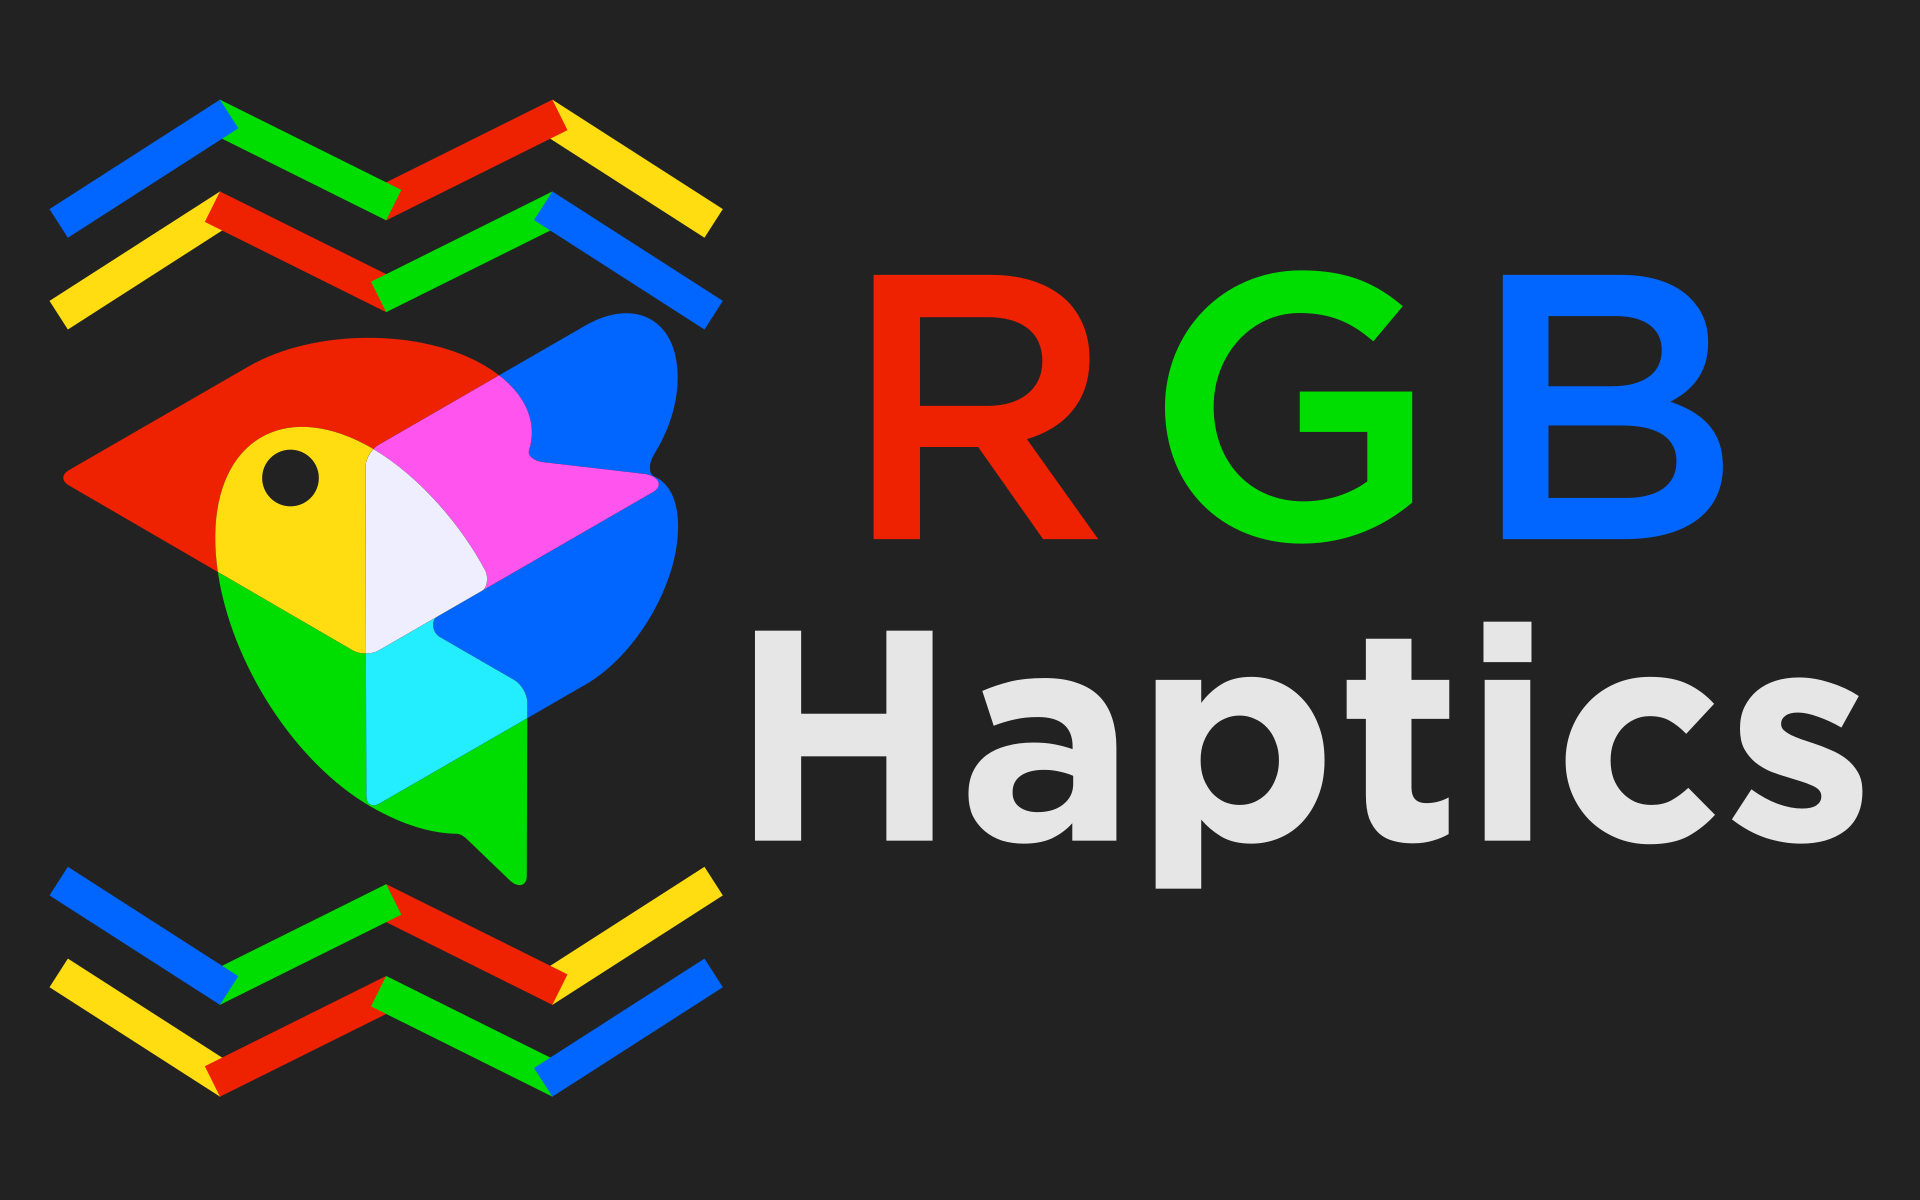 The current logo for RGB Haptics!